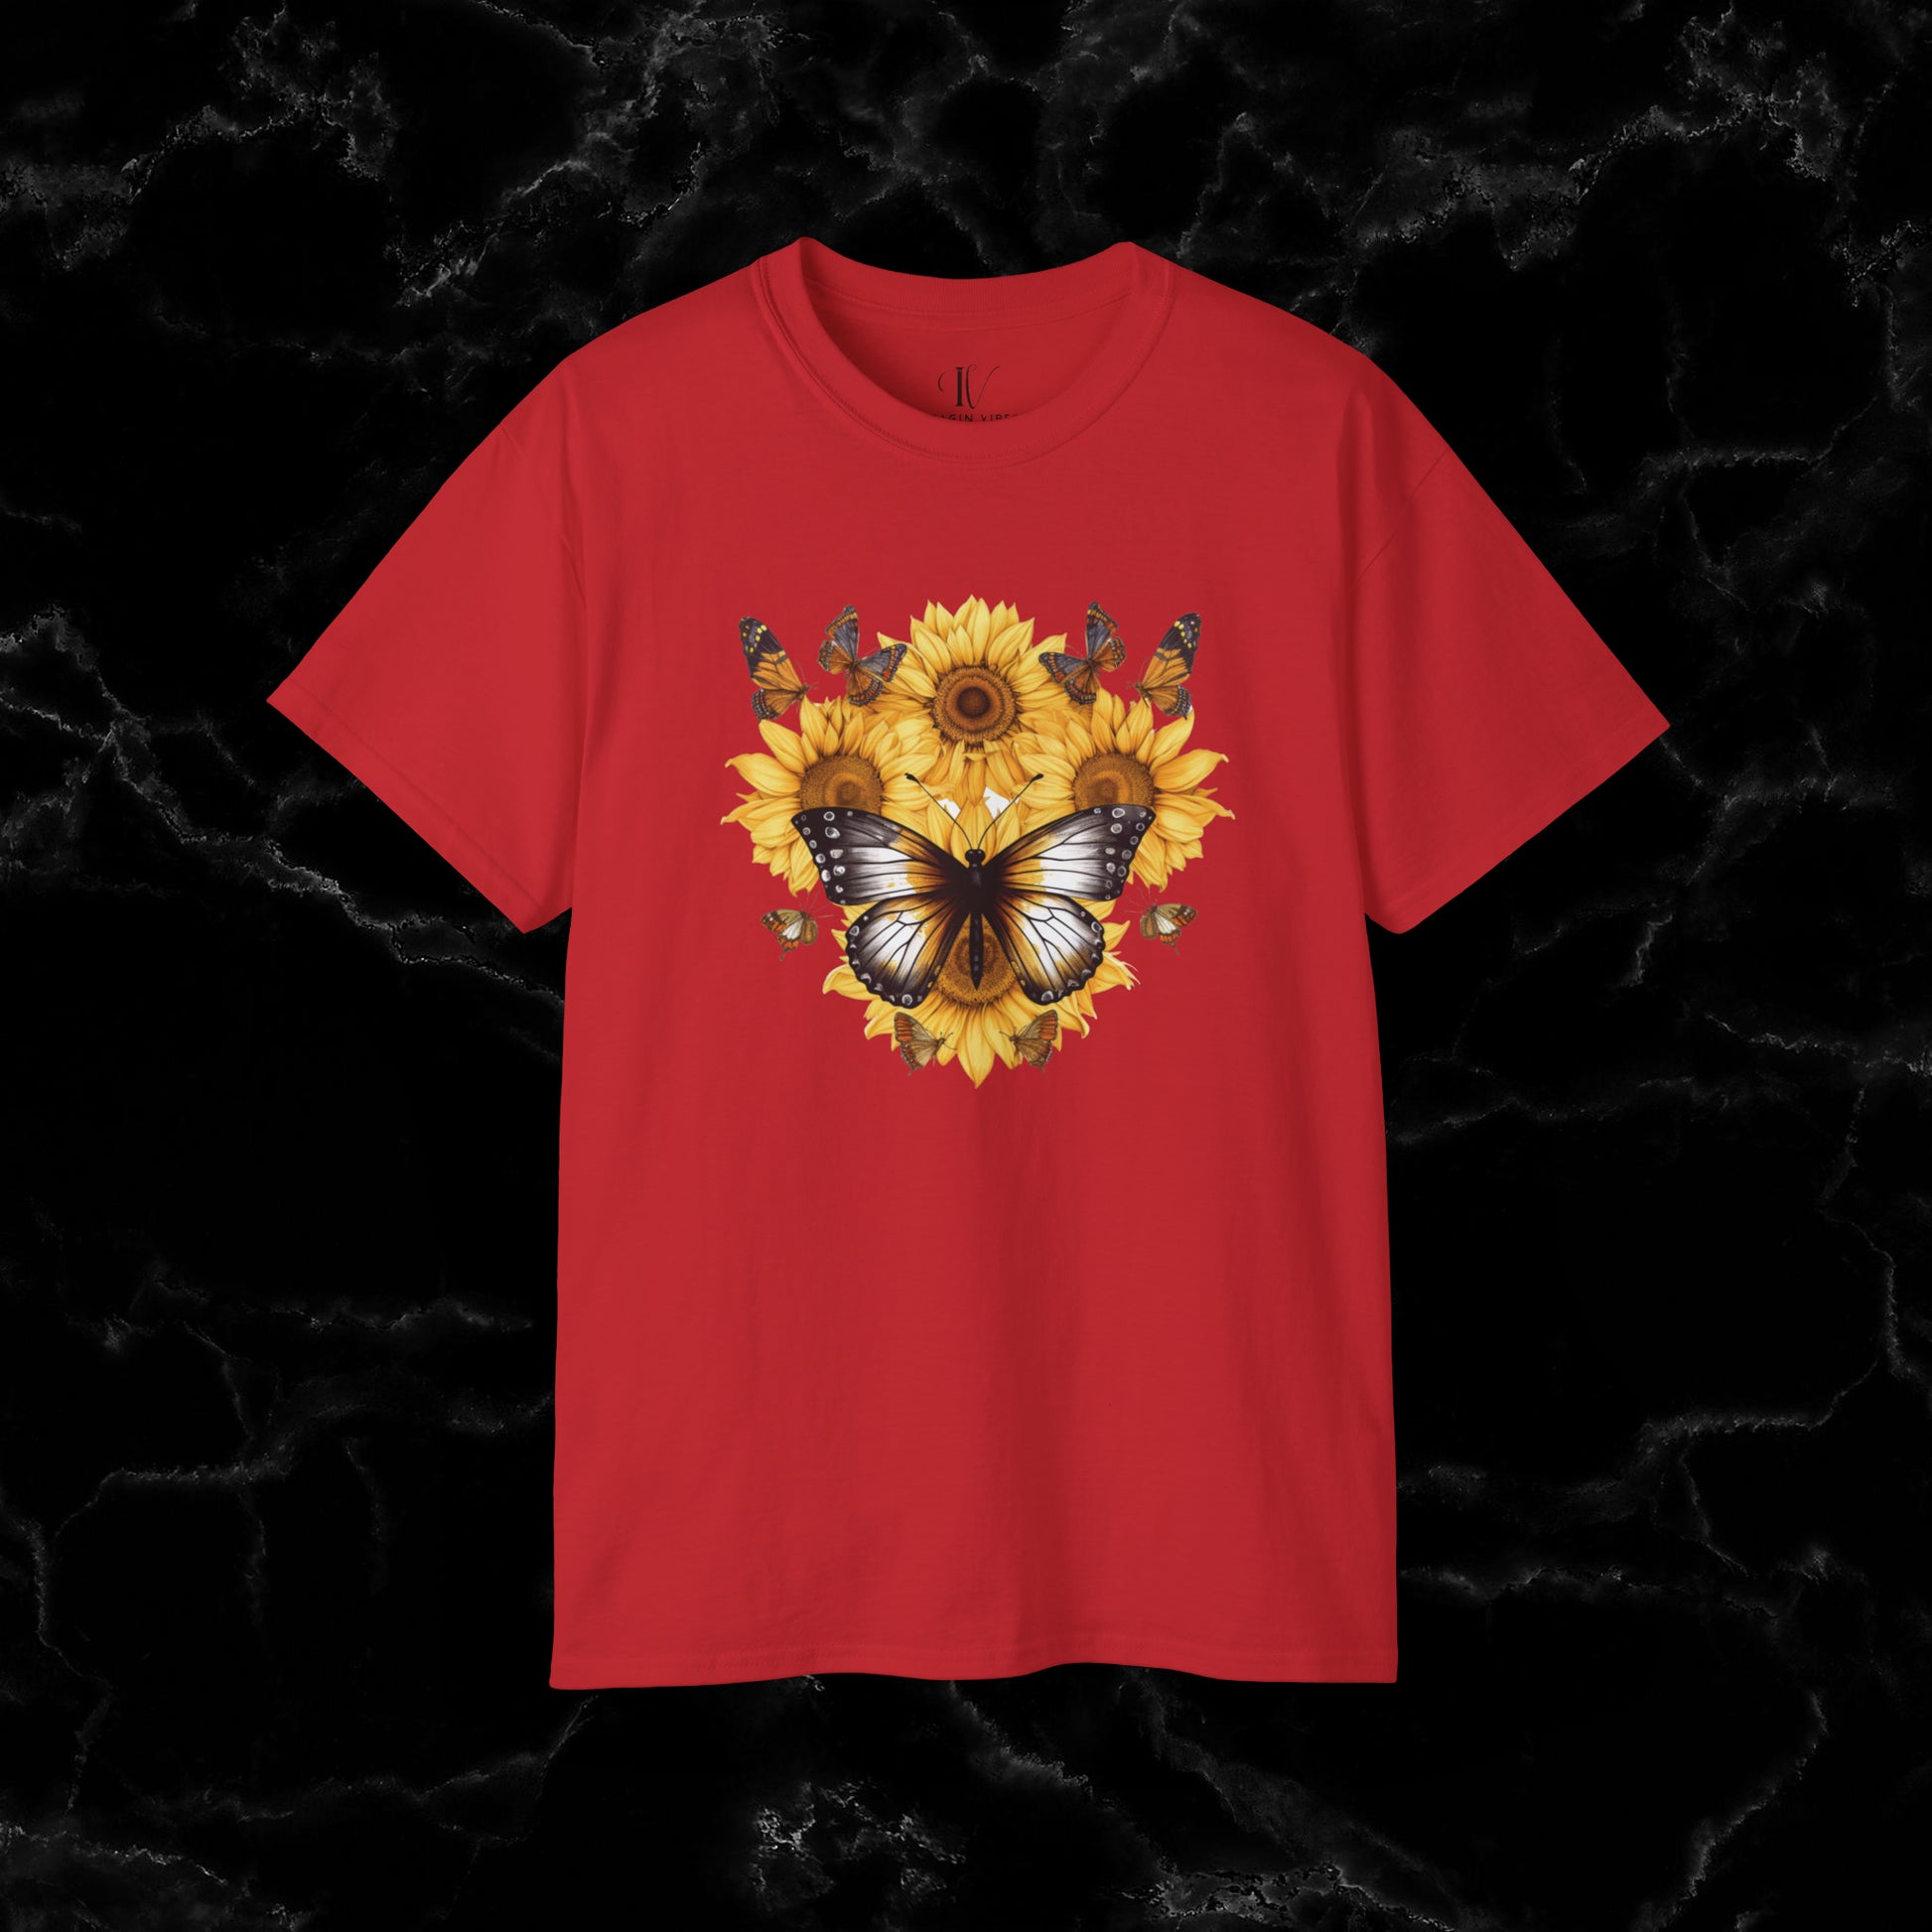 Sunflower Shirt - A Floral Tee, Garden Shirt, and Women's Fall Shirt with Nature-Inspired Design T-Shirt Red S 